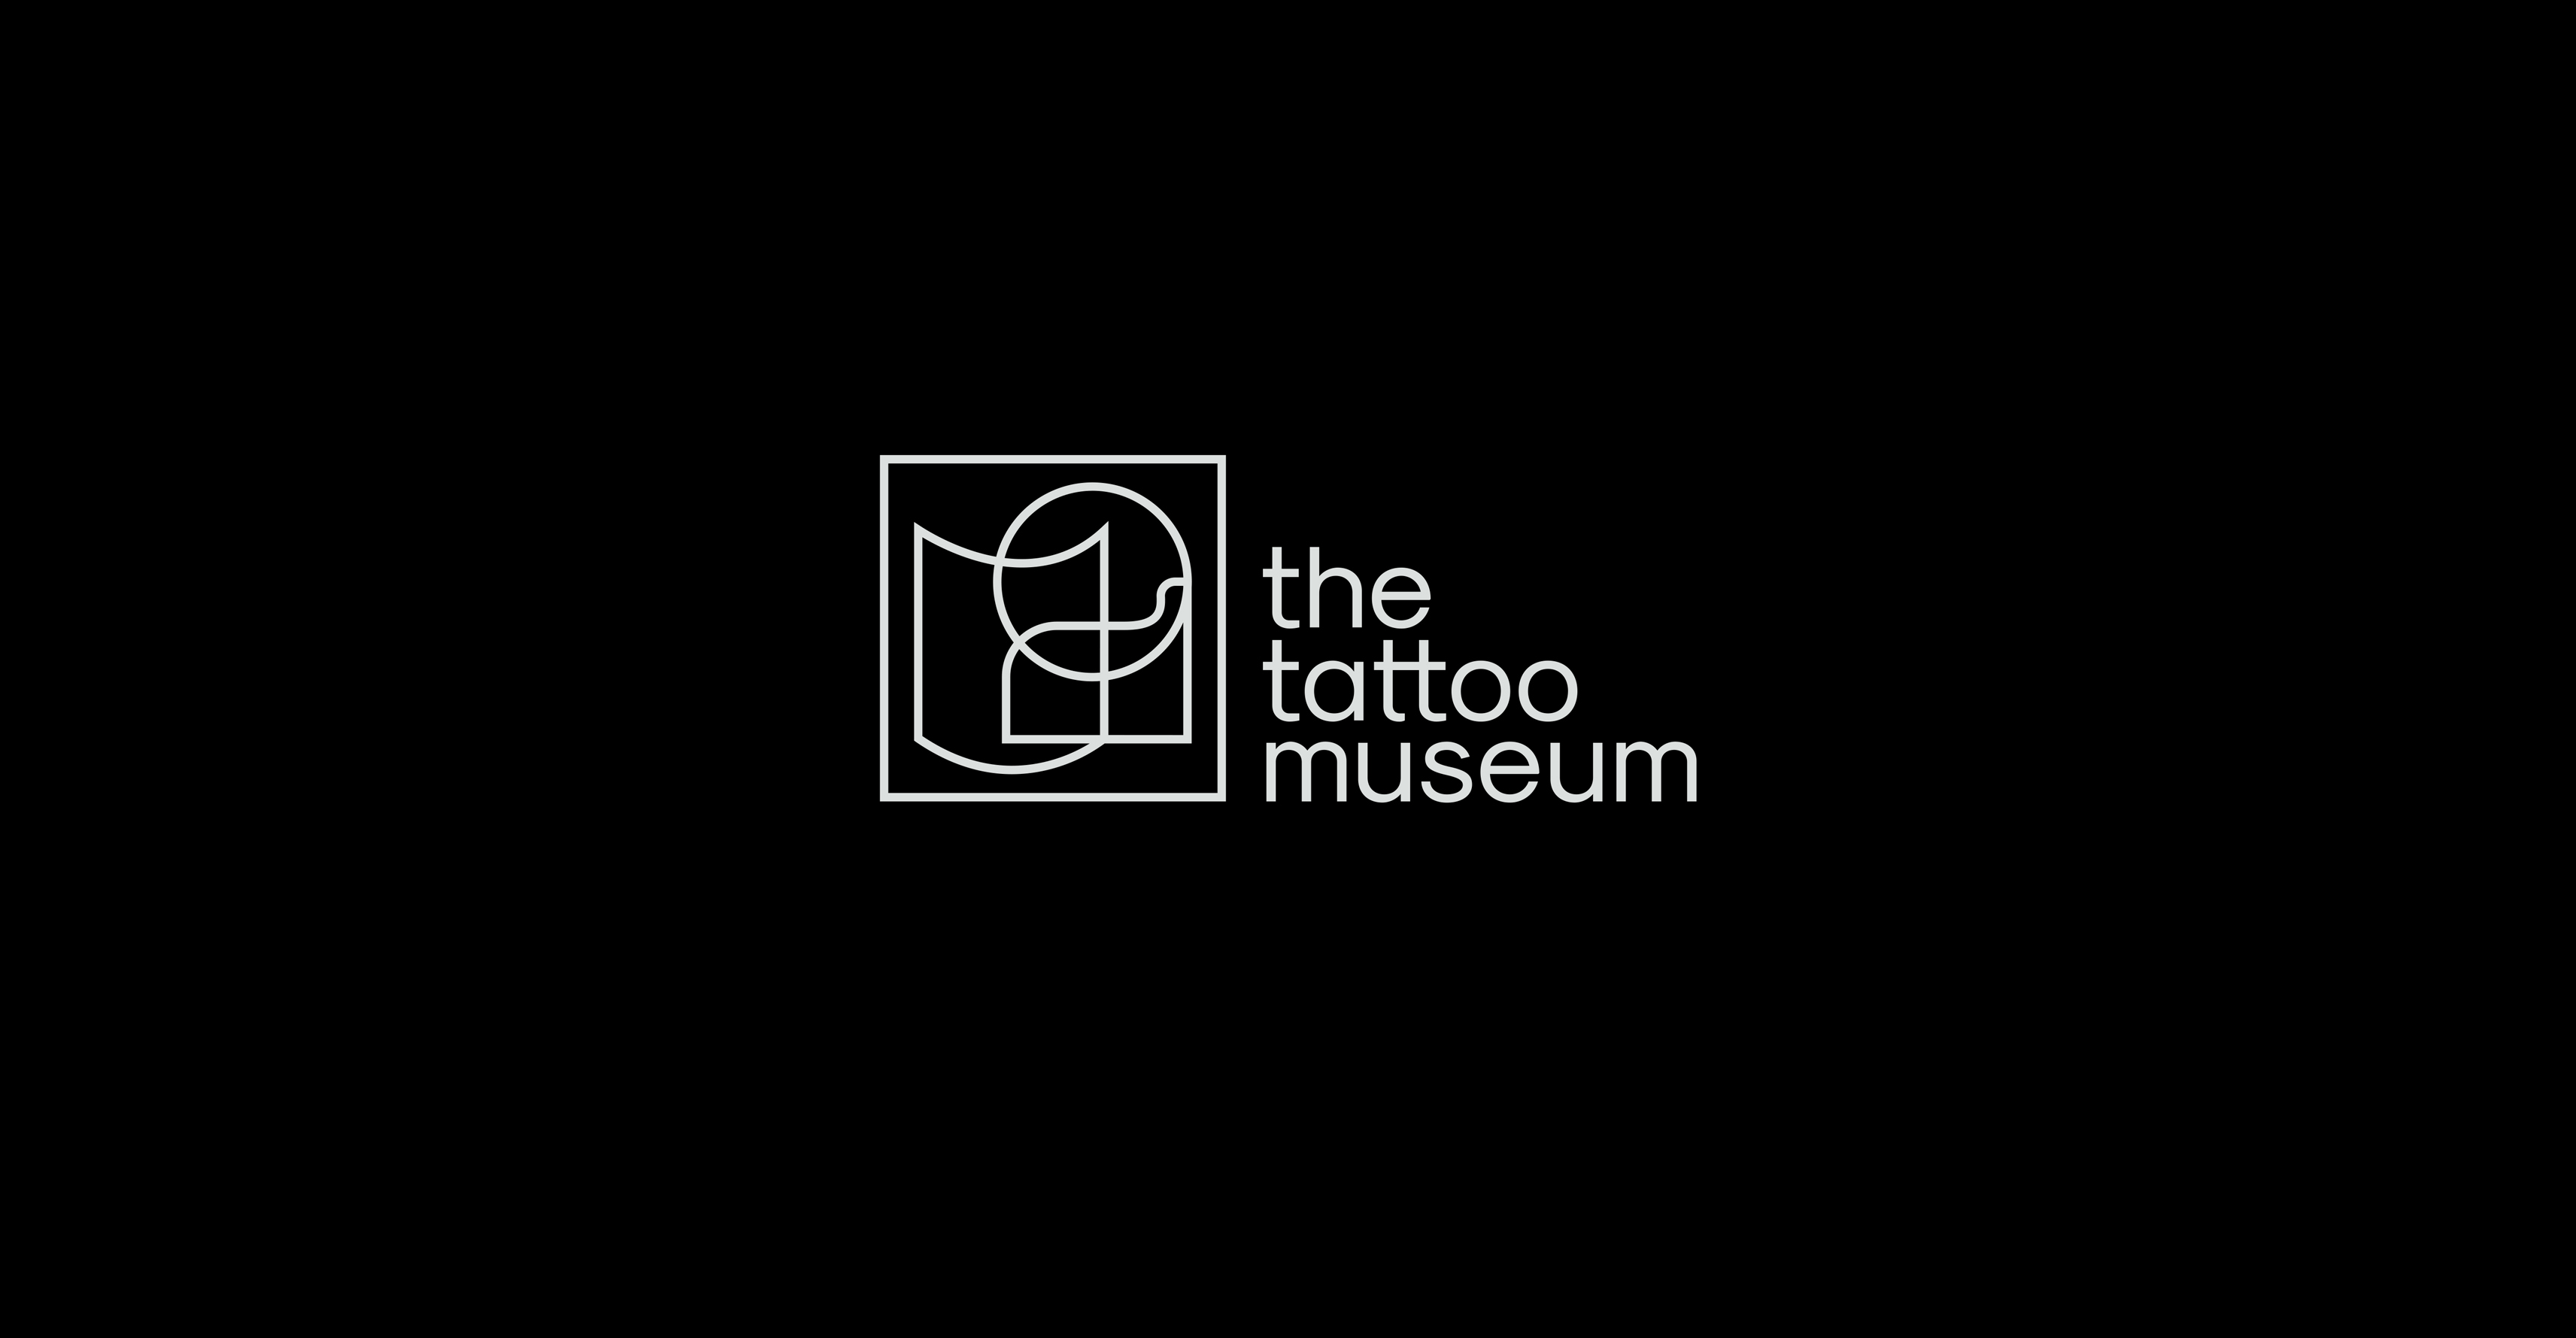 the tattoo museum Simon Merz Call for Creatives